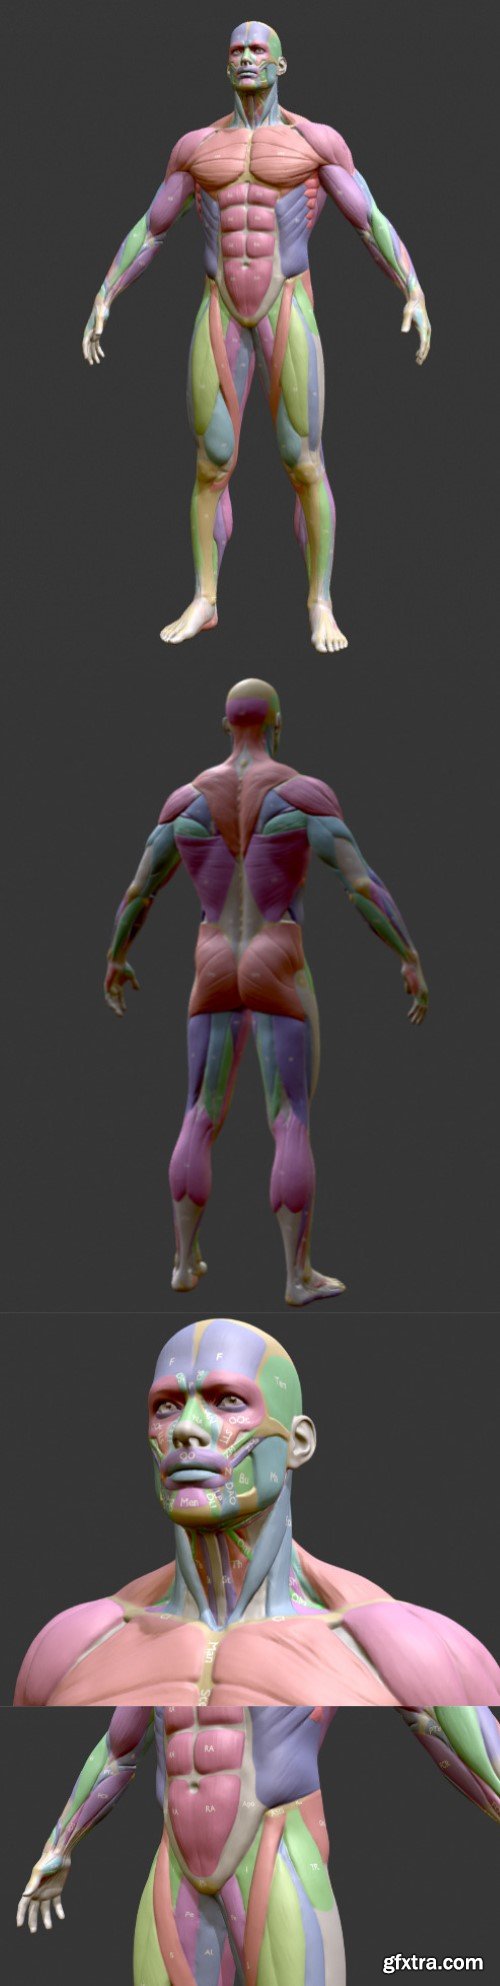 Écorché Male Musclenames Anatomy